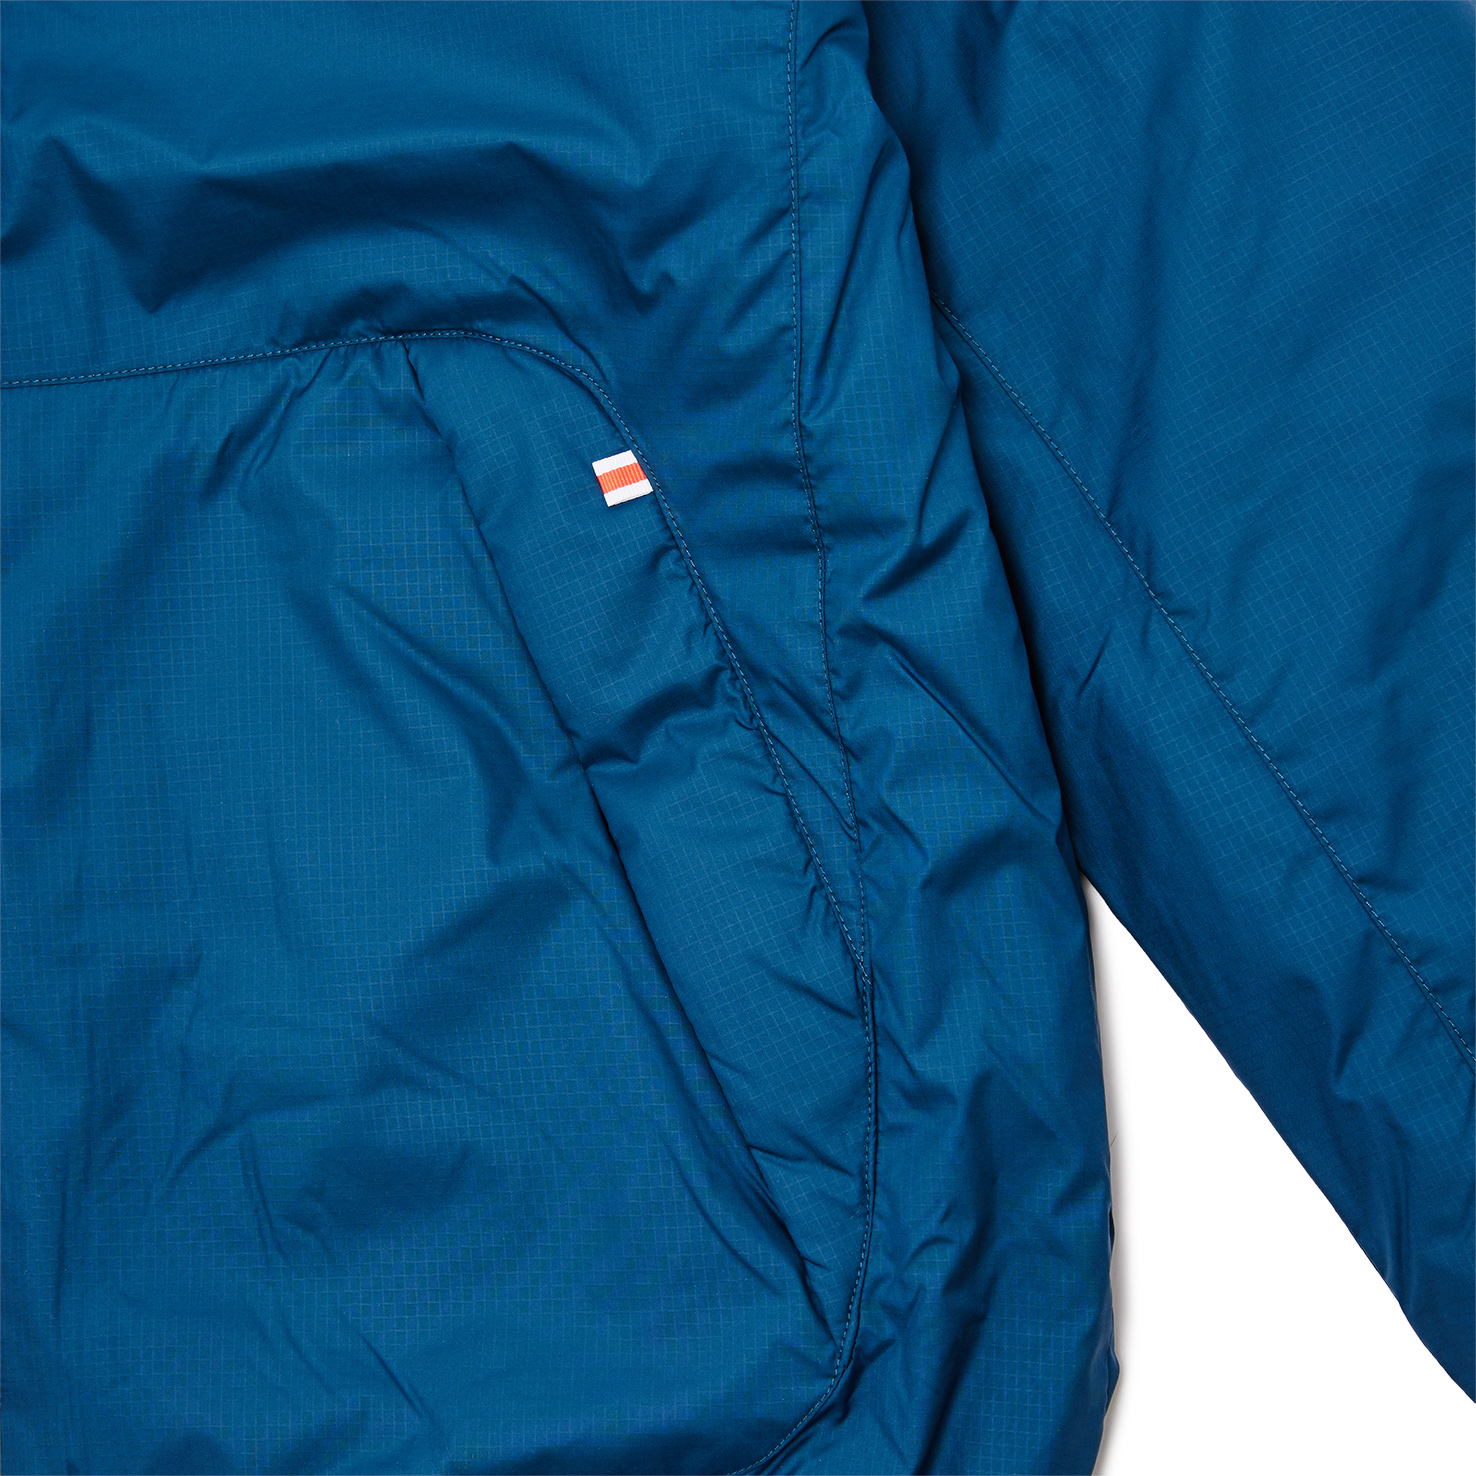 PUMA x HELLY HANSEN Rev. Padded Jacket S PUMA, размер 46-48, цвет синий PM532841 - фото 4